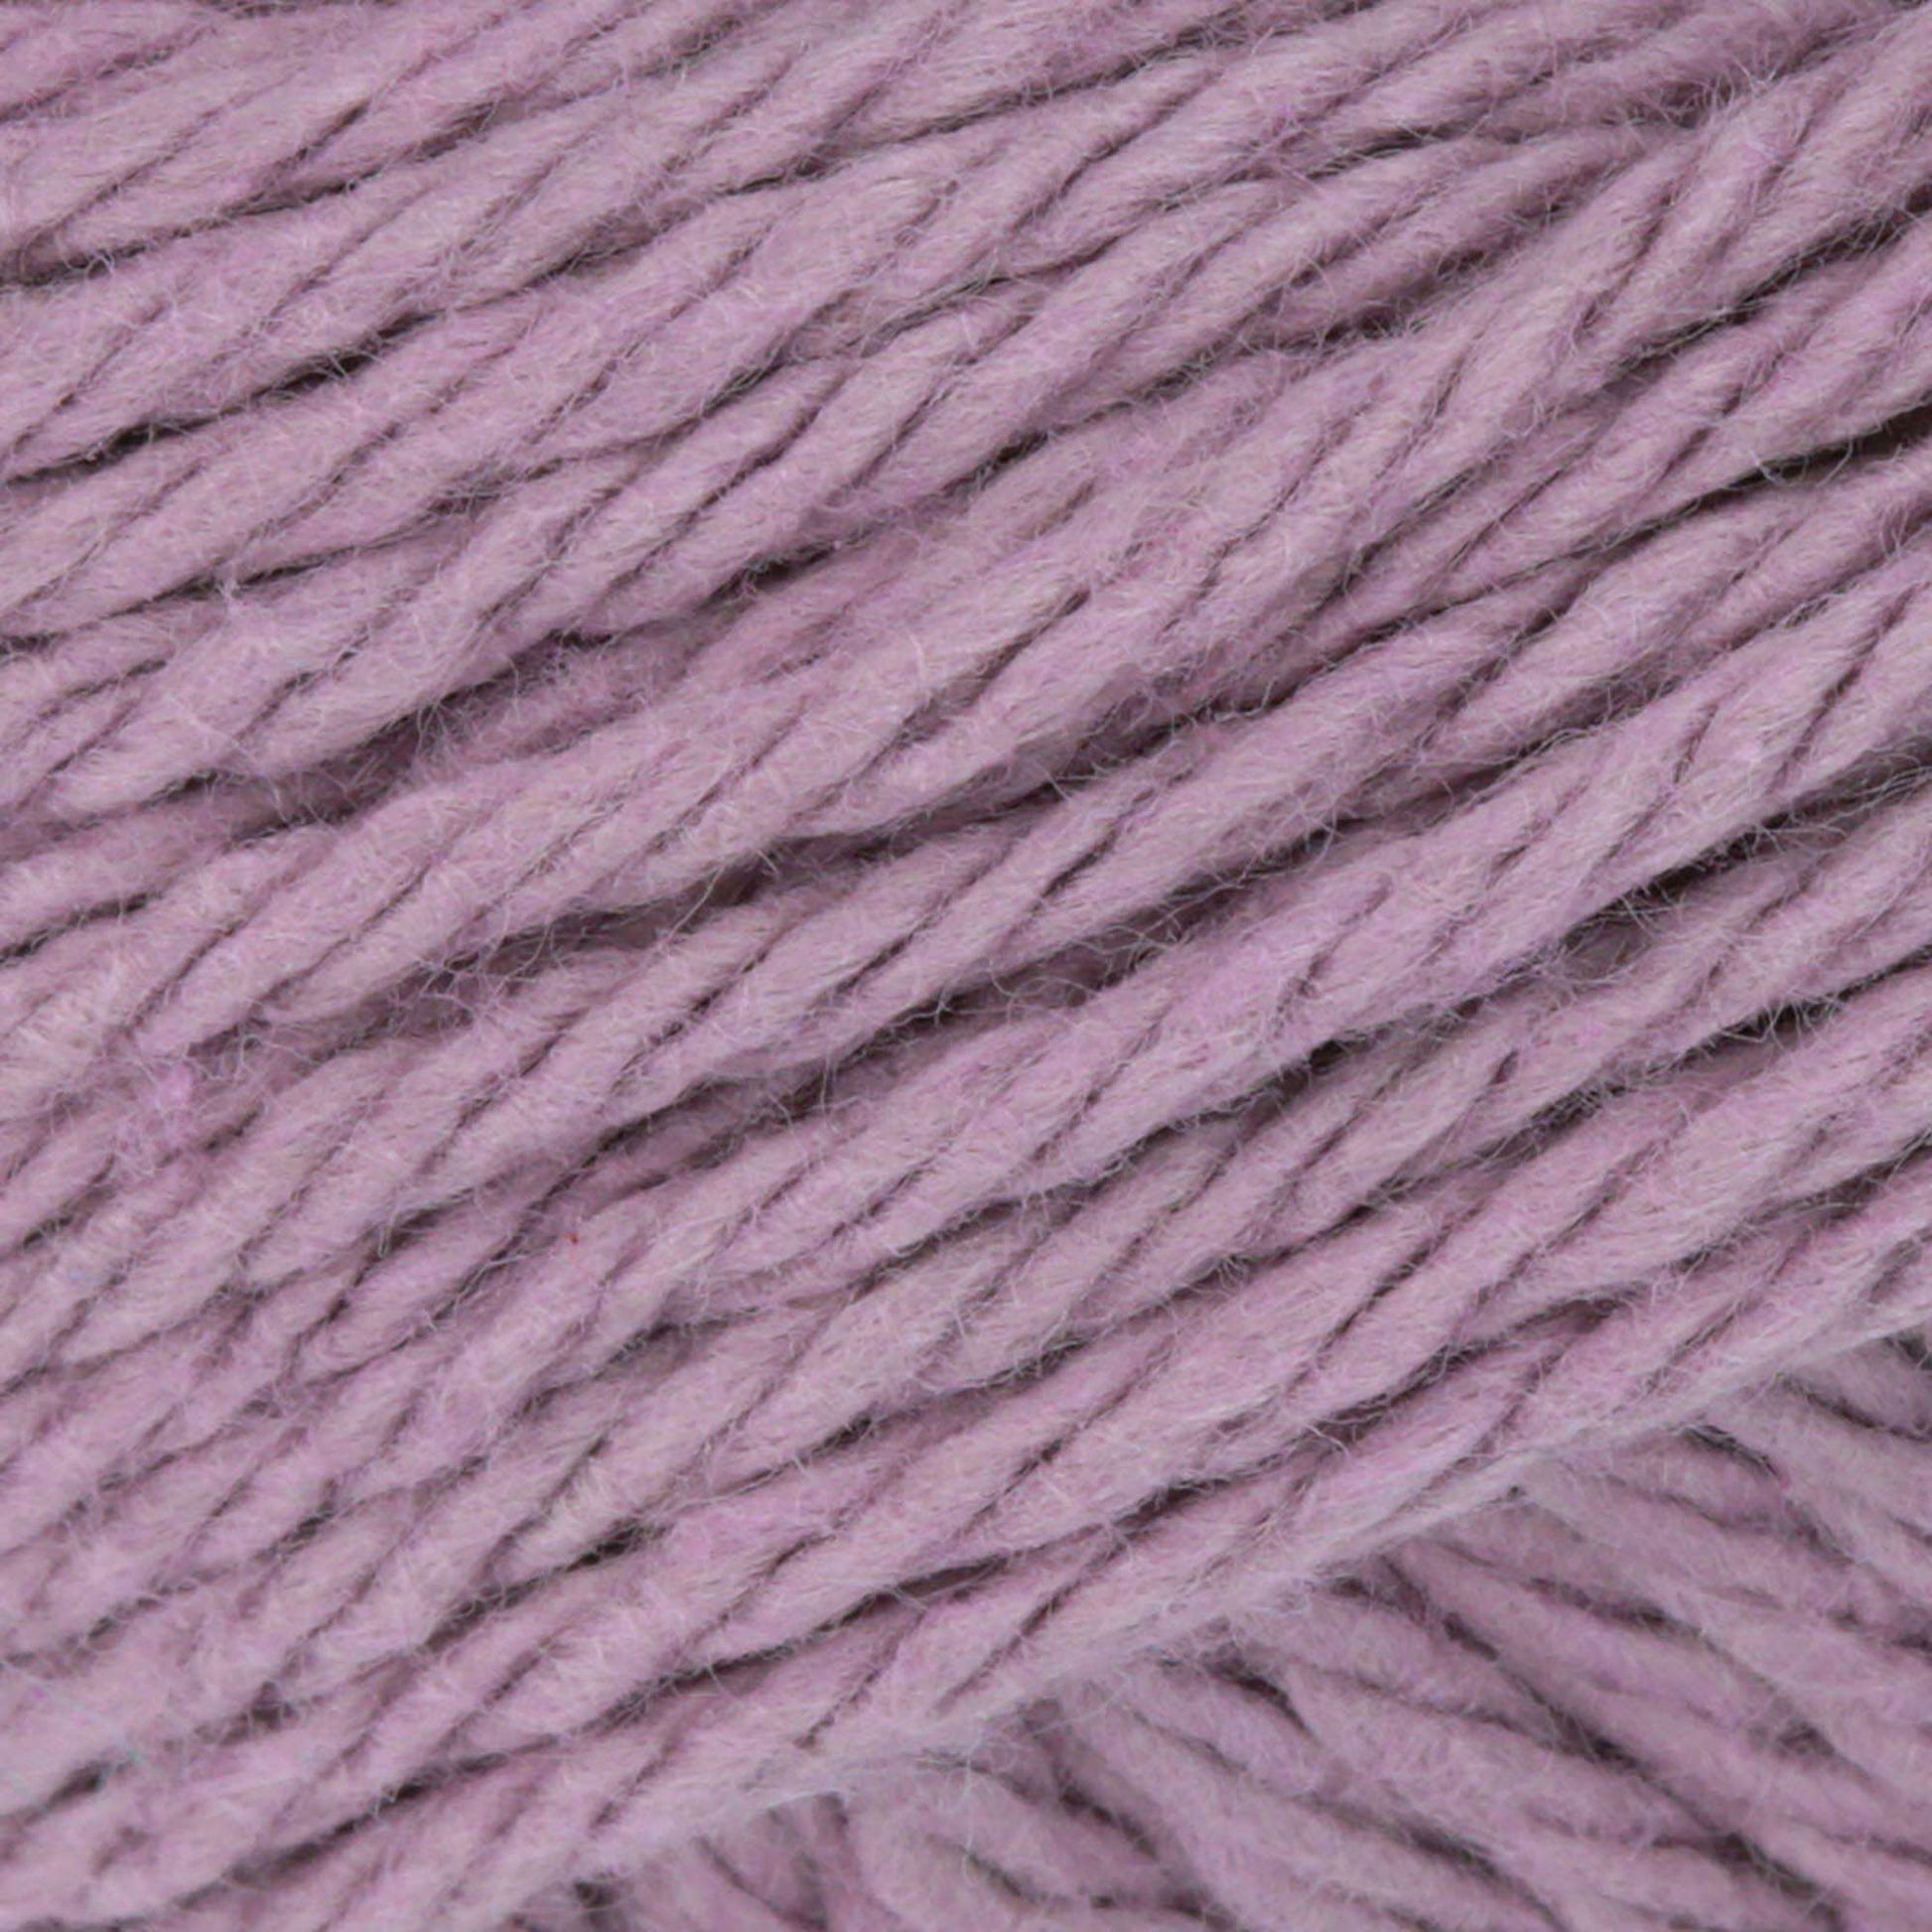 Lily Sugar'N Cream Hot Pink Yarn - 6 Pack of 71g/2.5oz - Cotton - 4 Medium  (Worsted) - 120 Yards - Knitting/Crochet